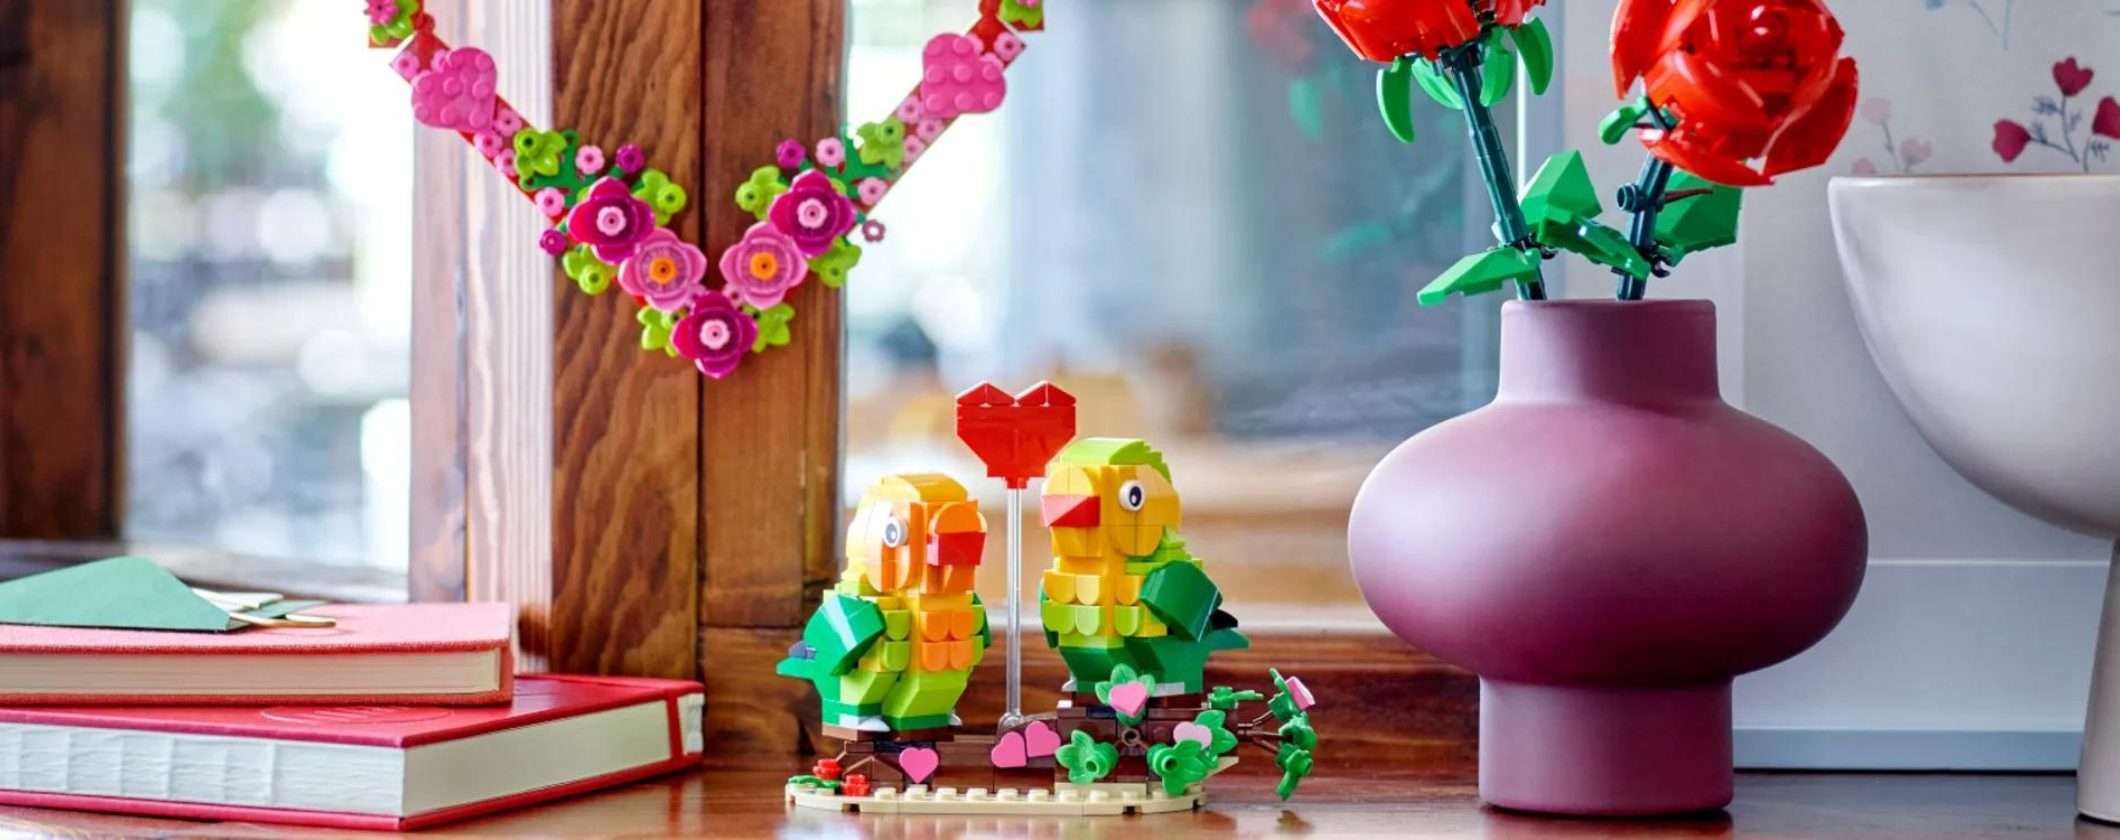 Lego: i set da regalare a San Valentino